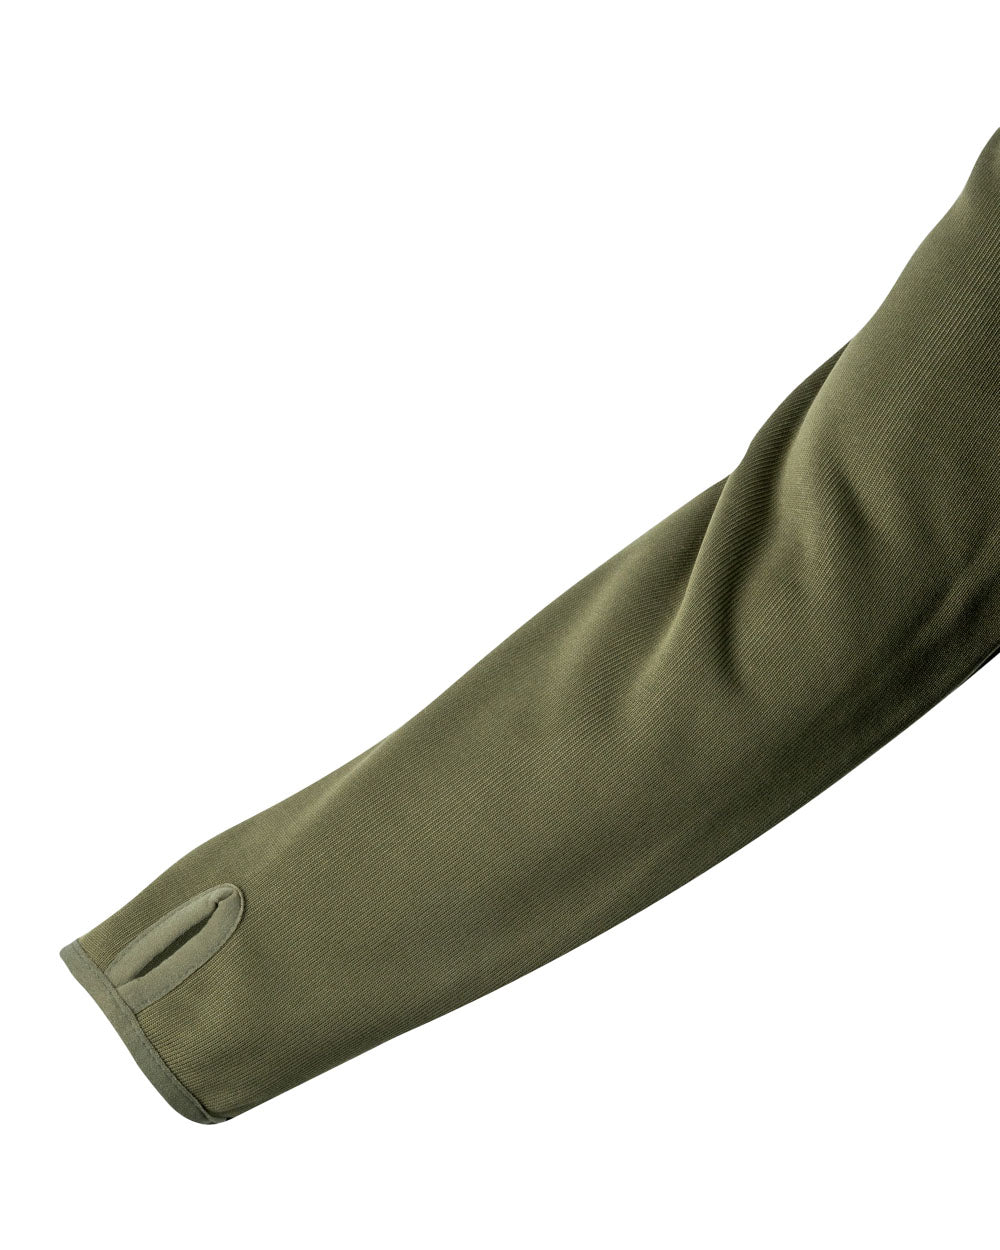 Green coloured Viper Gen 2 Spec Ops Fleece Jacket on White background 